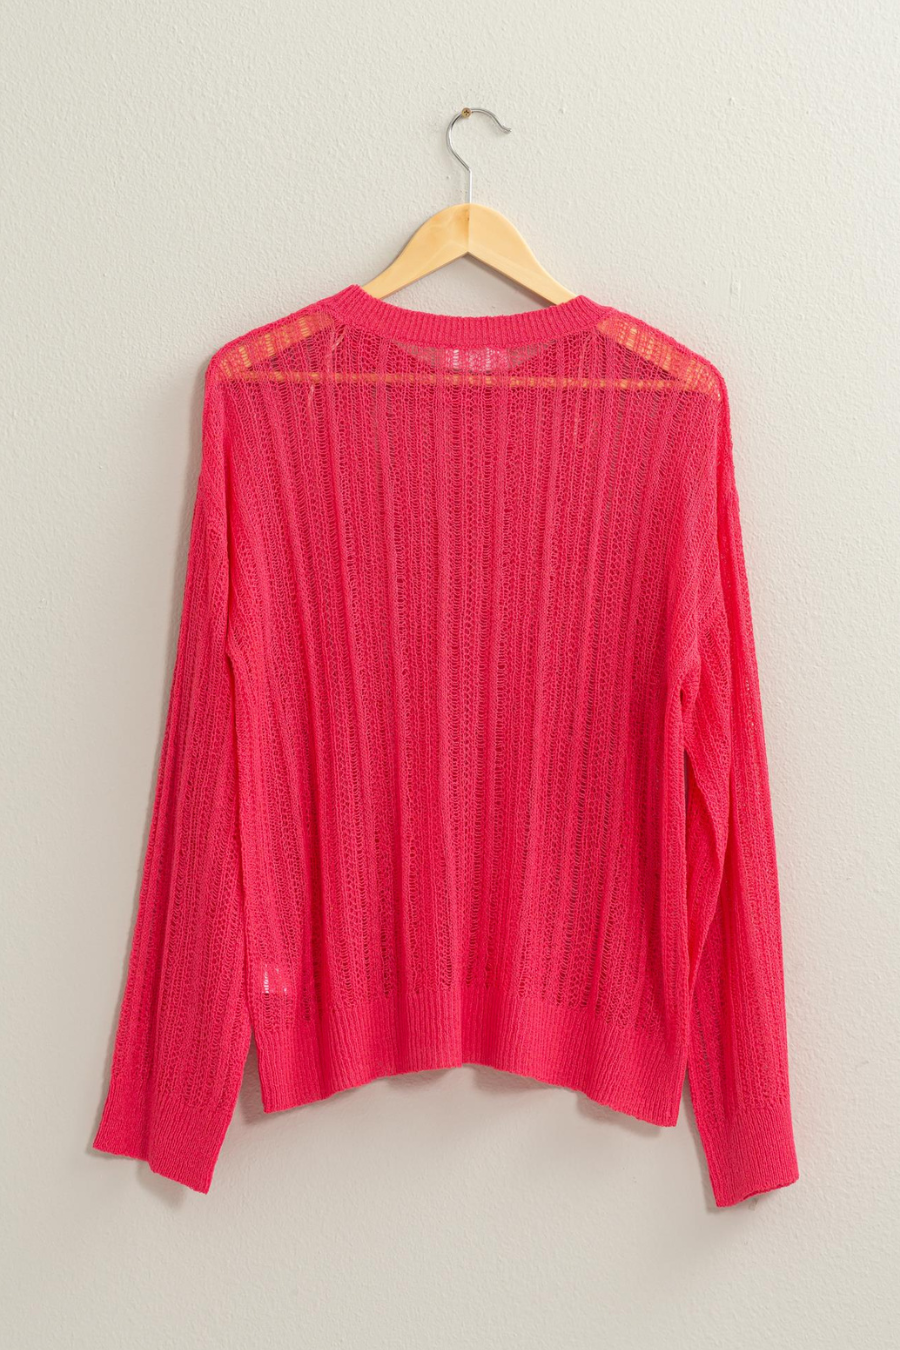 back view of pink lottie sweater of wooden hanger 